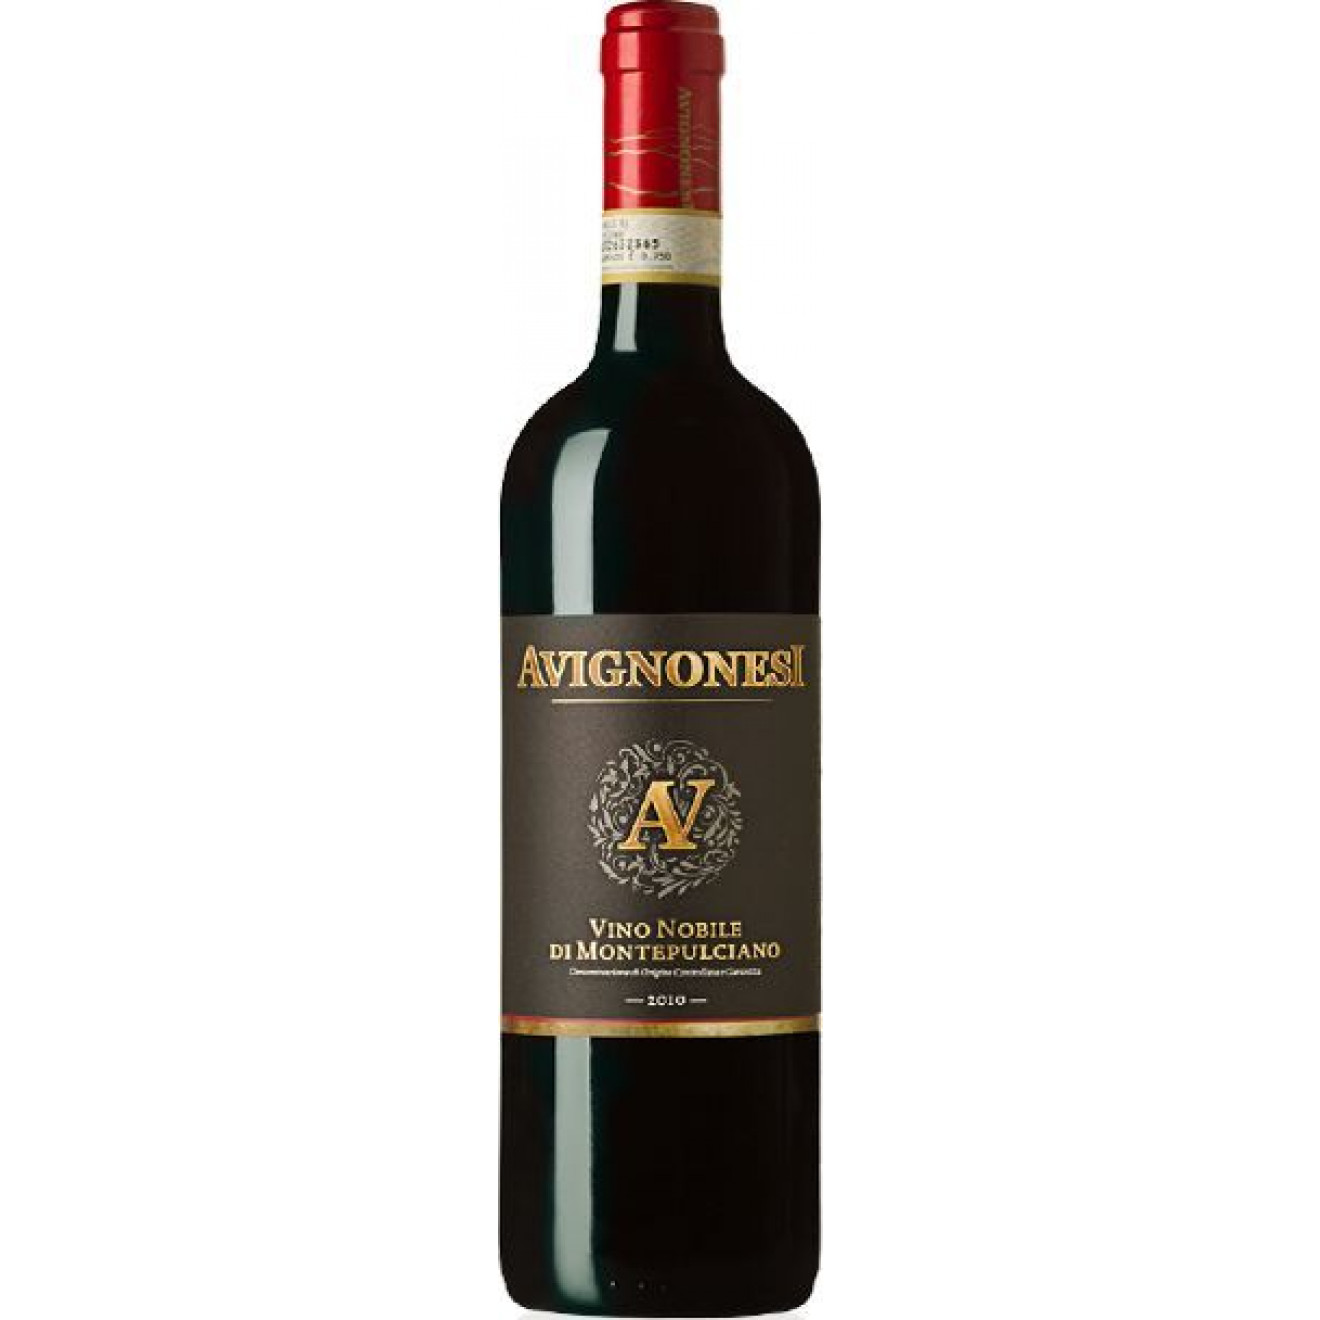 Vino Nobile di Montepulciano Avignonesi BIO 2016 0,75l